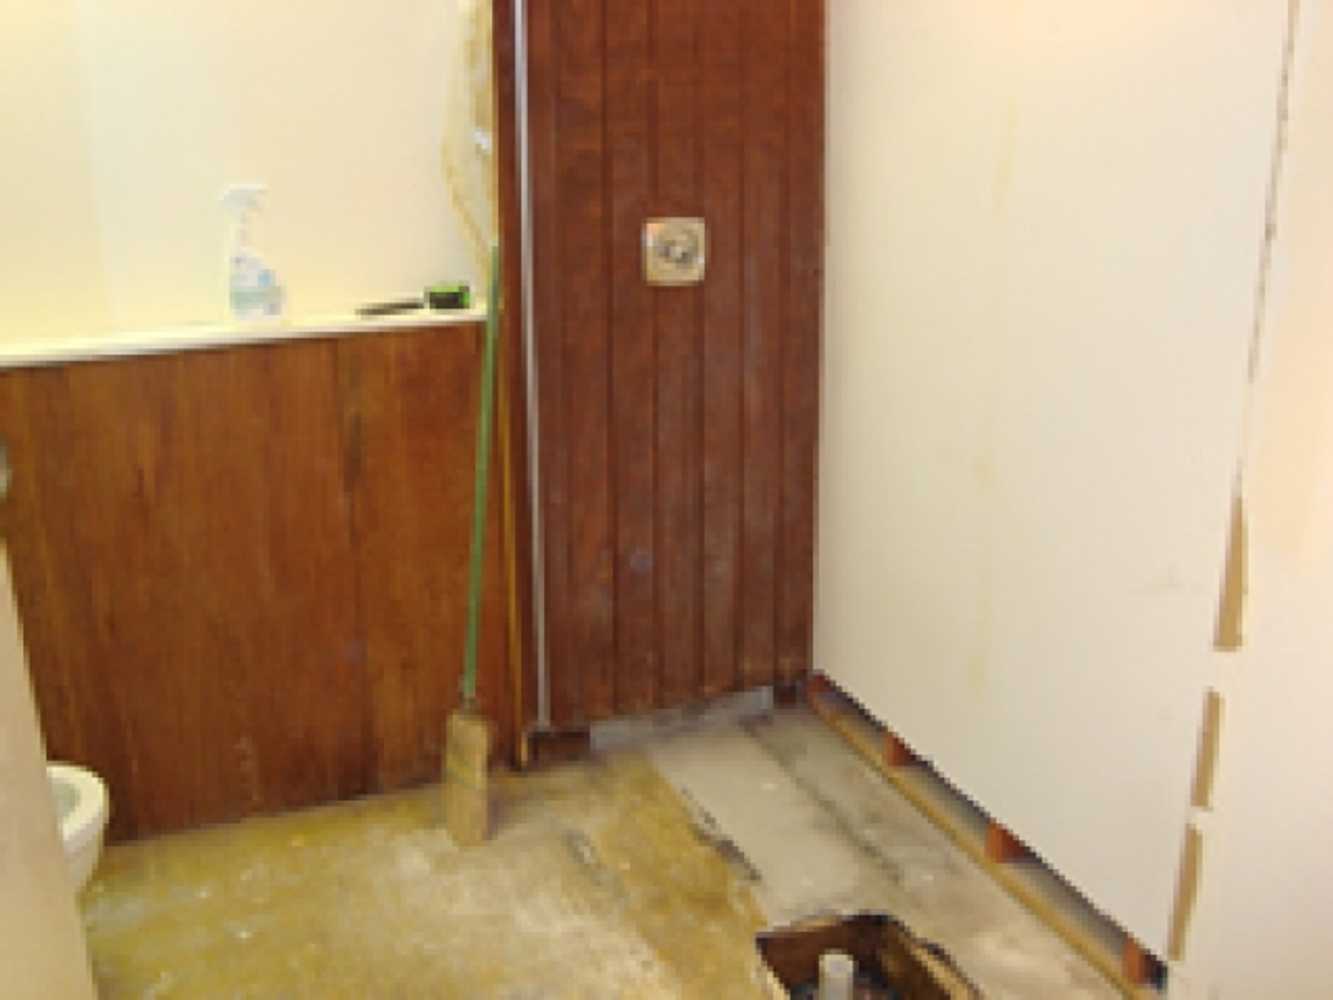 Bathroom Remodel 2009